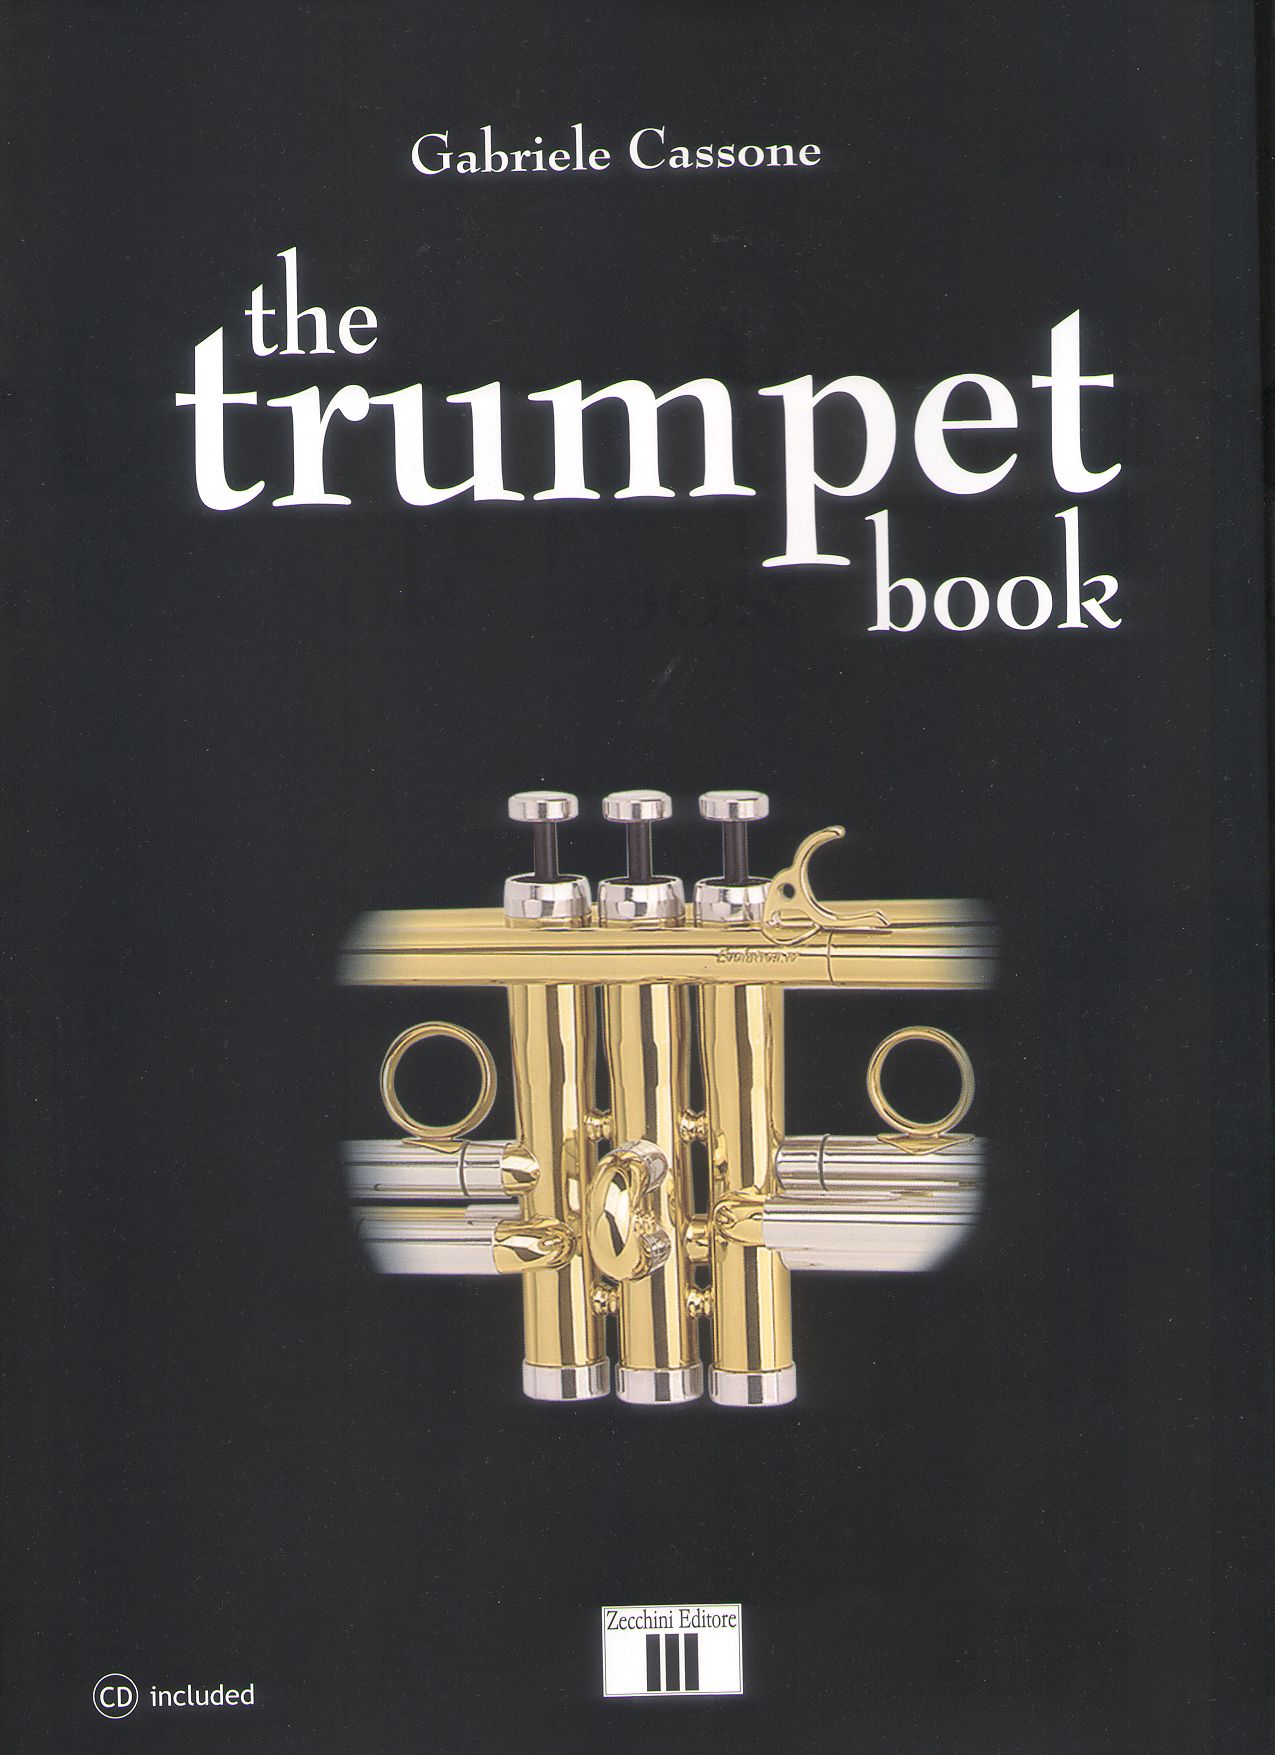 The Trumpet Book by Gabriele Cassone